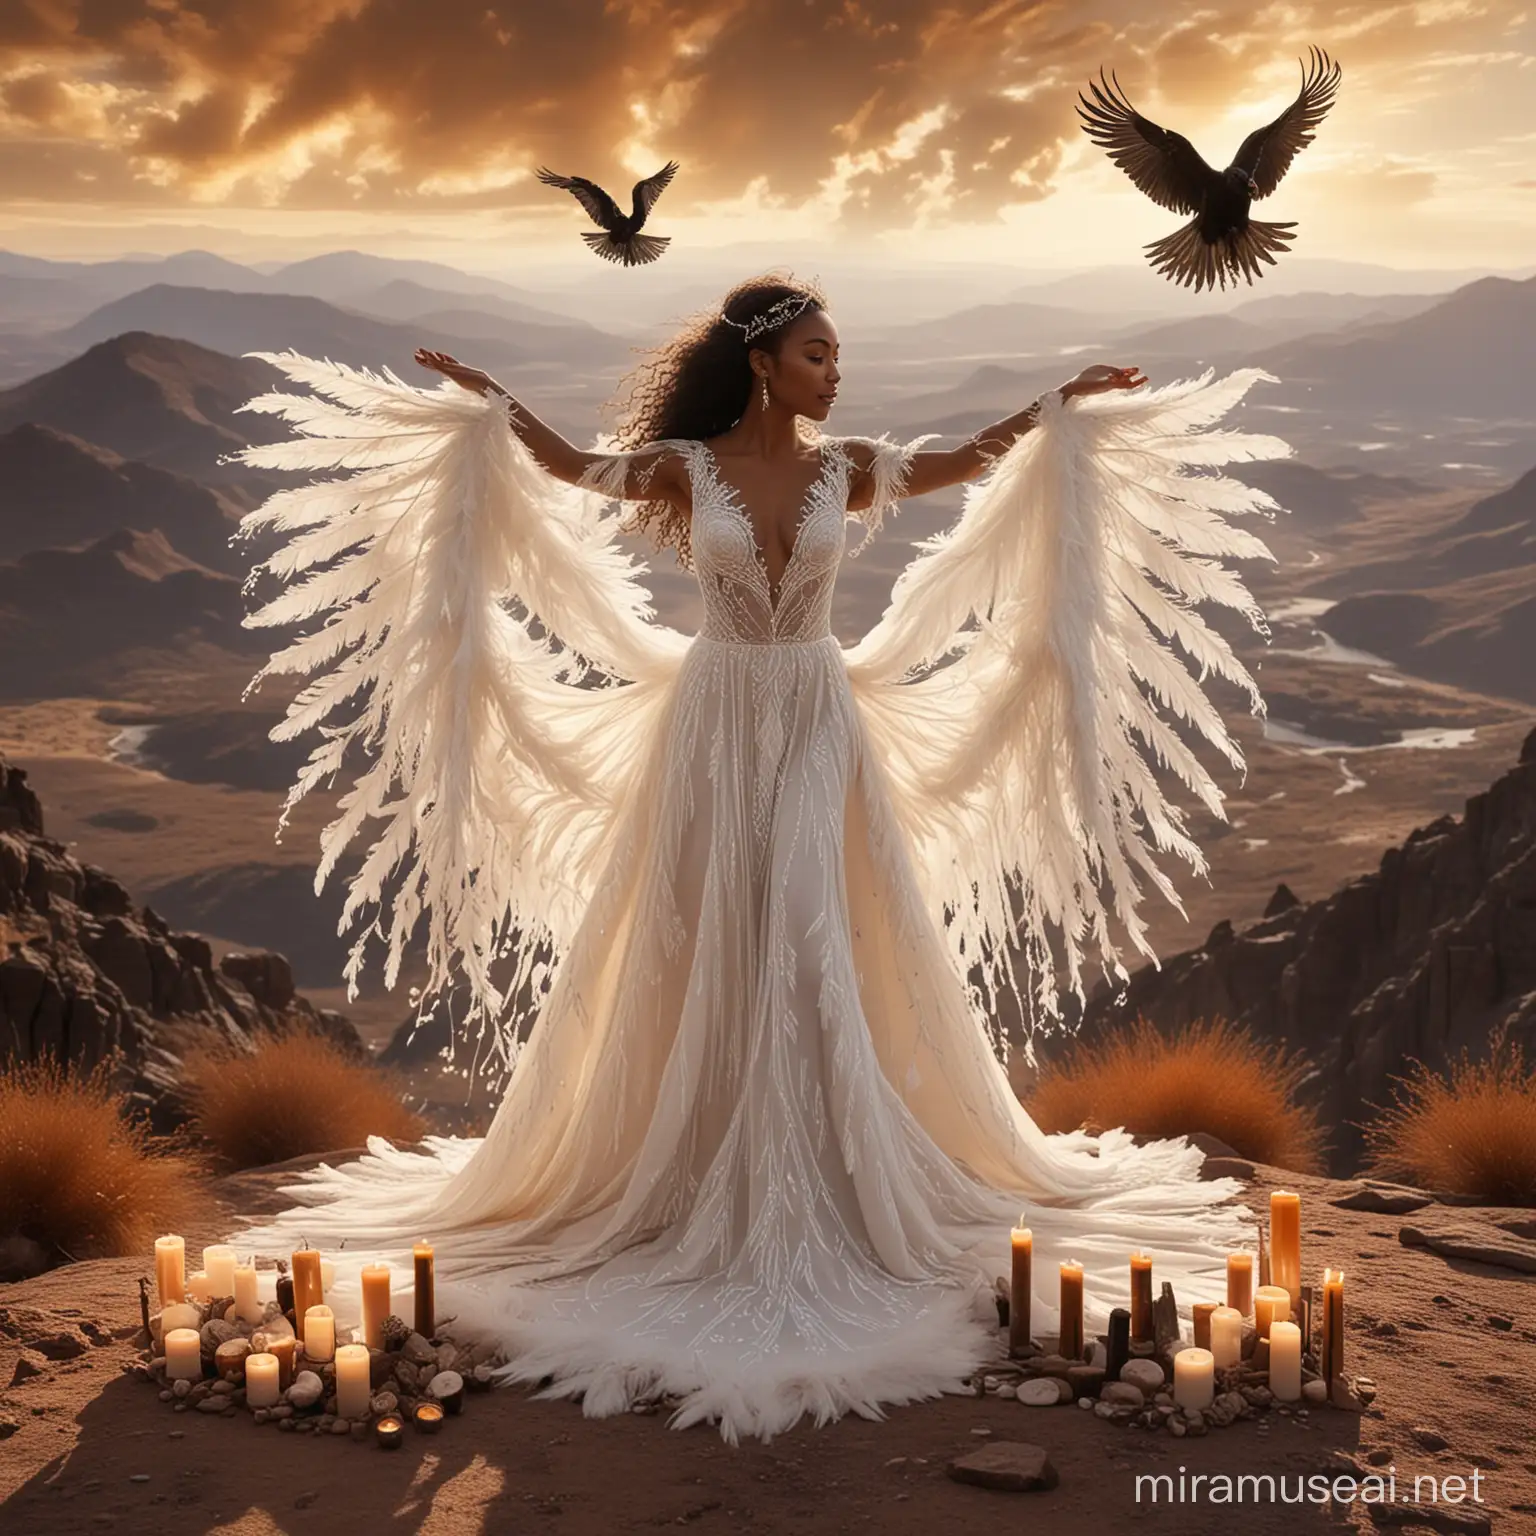 Black women in feathery wedding dress, dessert runes, phoenix bird flying over mountain